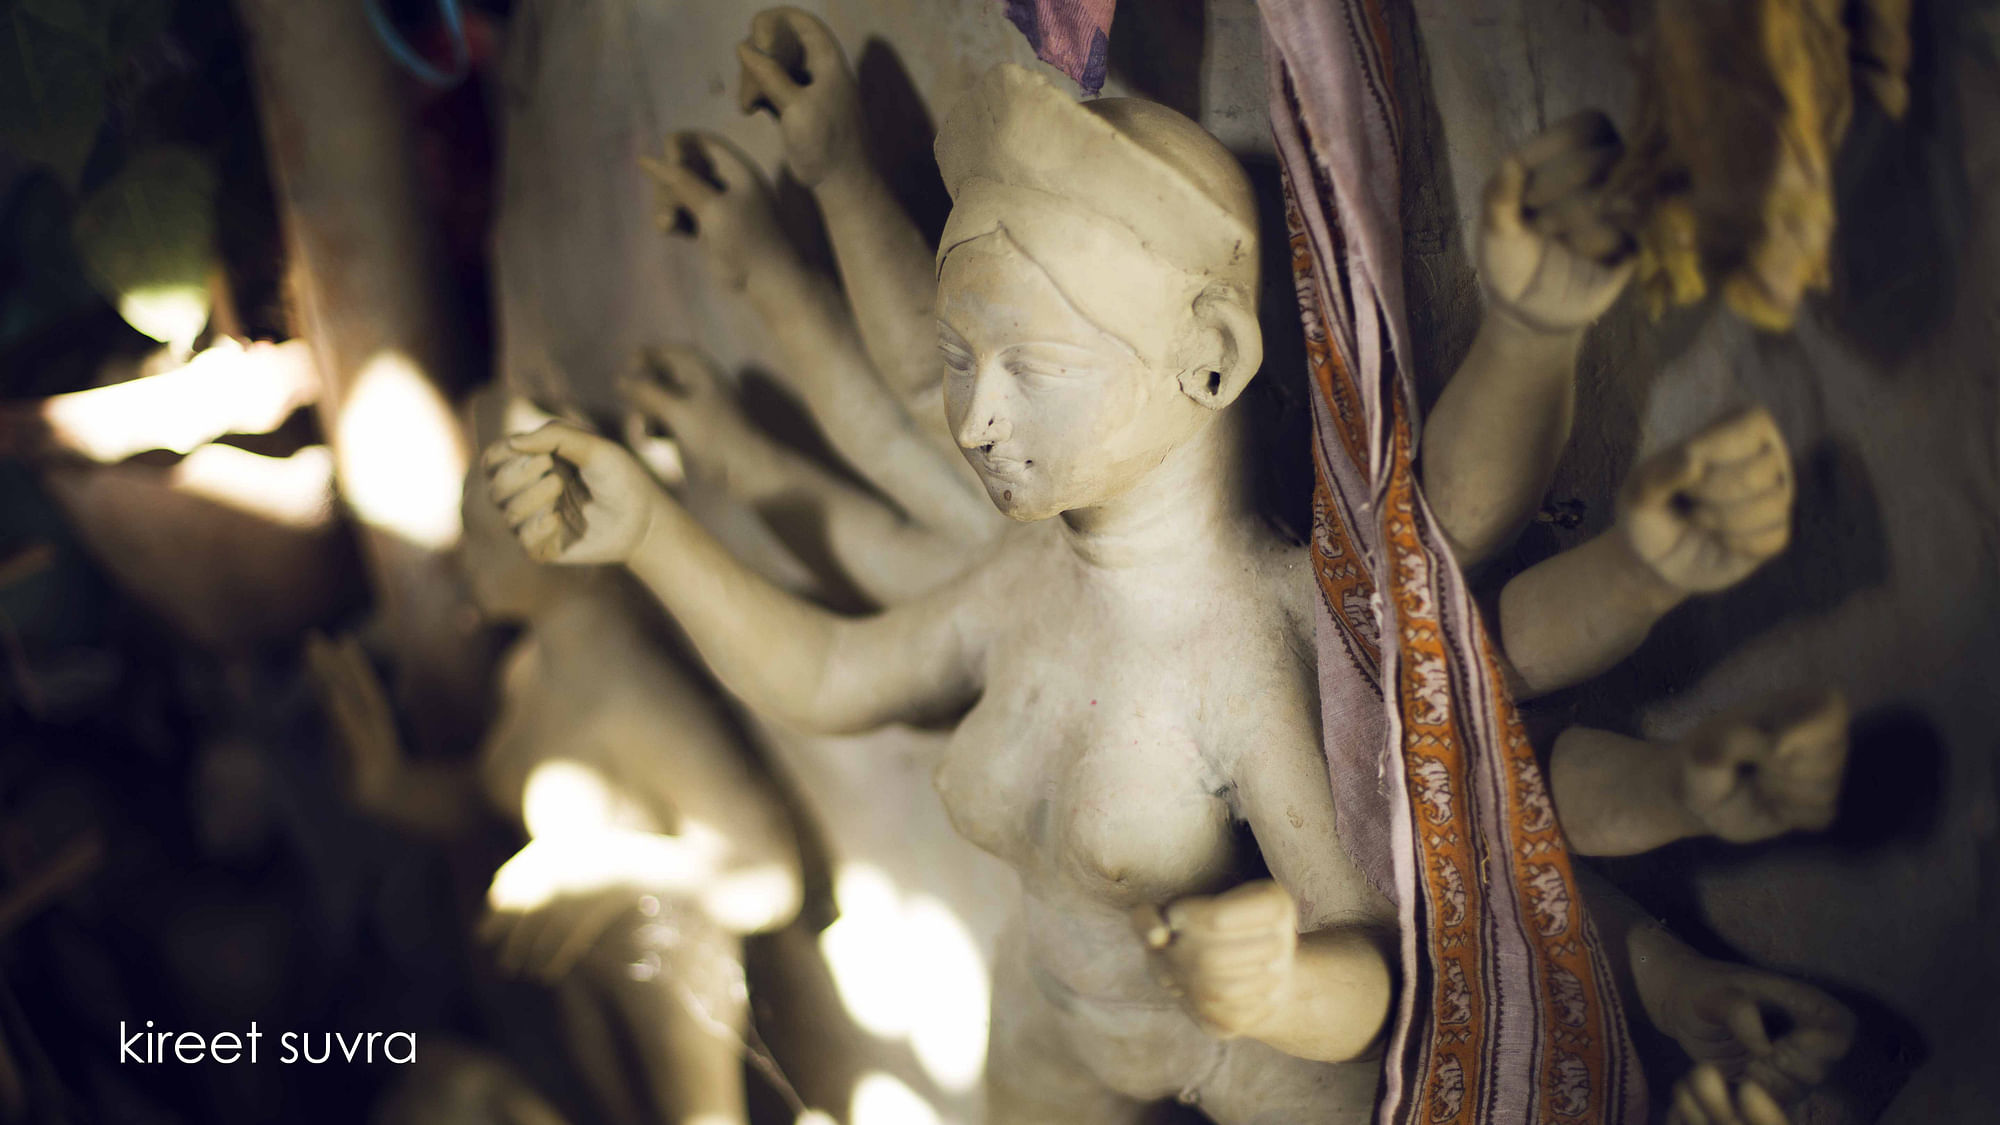 An unfinished figurine of the Mother Goddess at Kumortuli, Kolkata’s potter hub. (Photo Courtesy: Kireet Suvra)